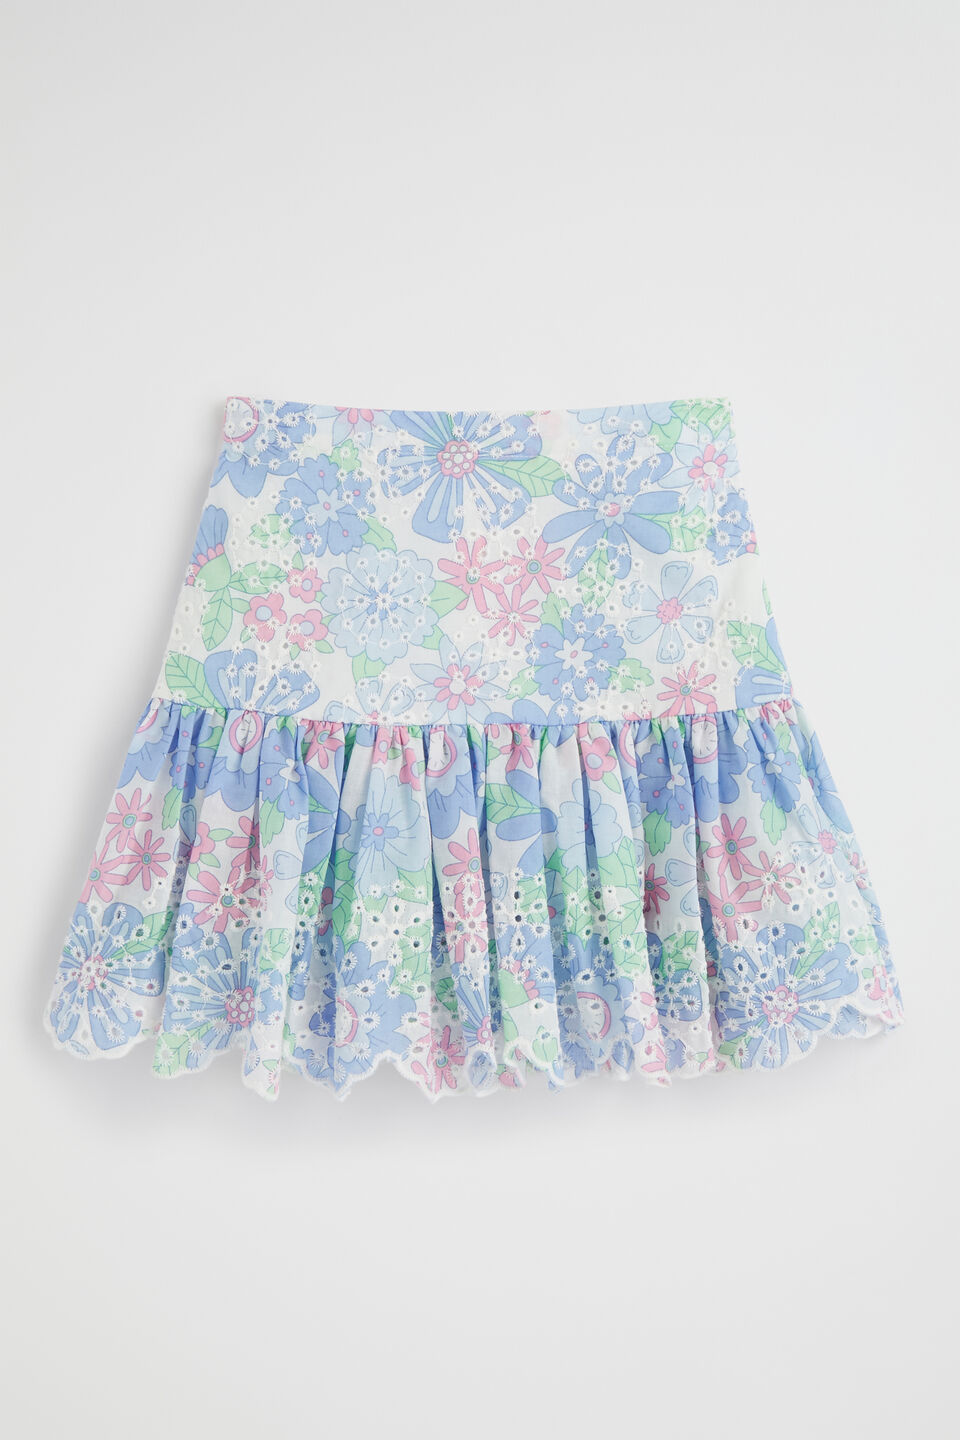 Cutwork Floral Skirt  Baby Blue